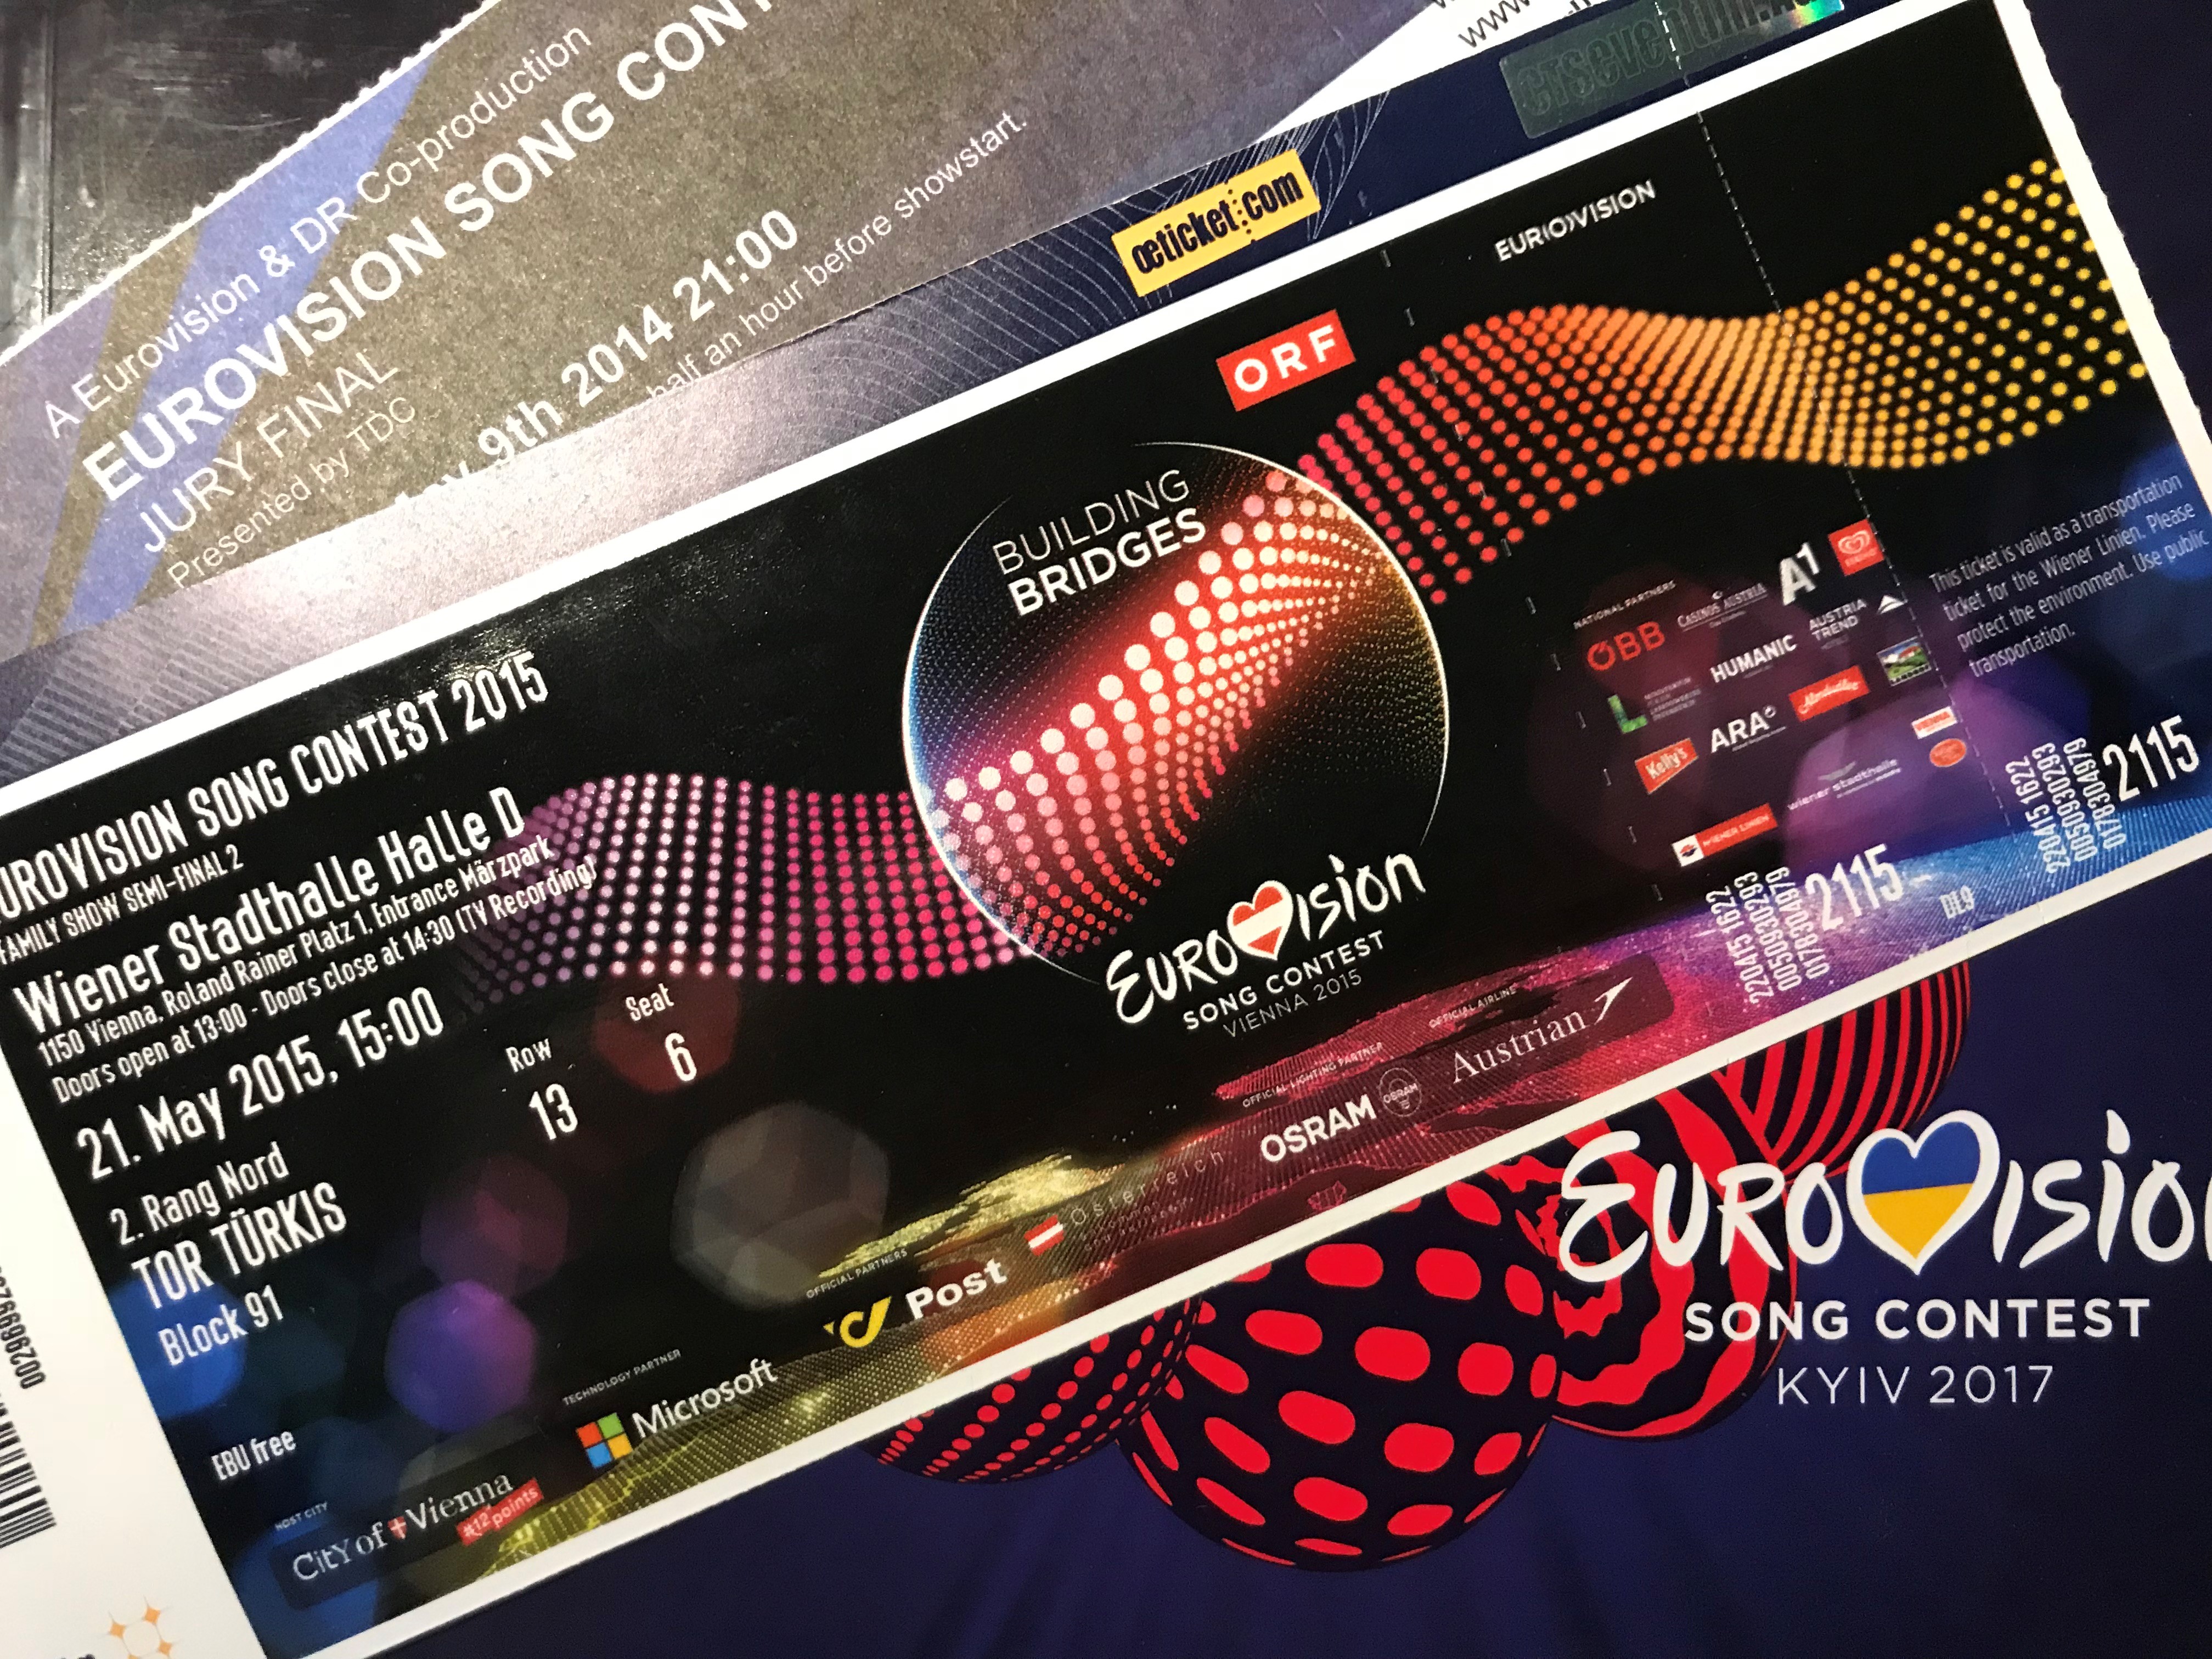 Eurovision Song Contest 2014-2015 jegyek